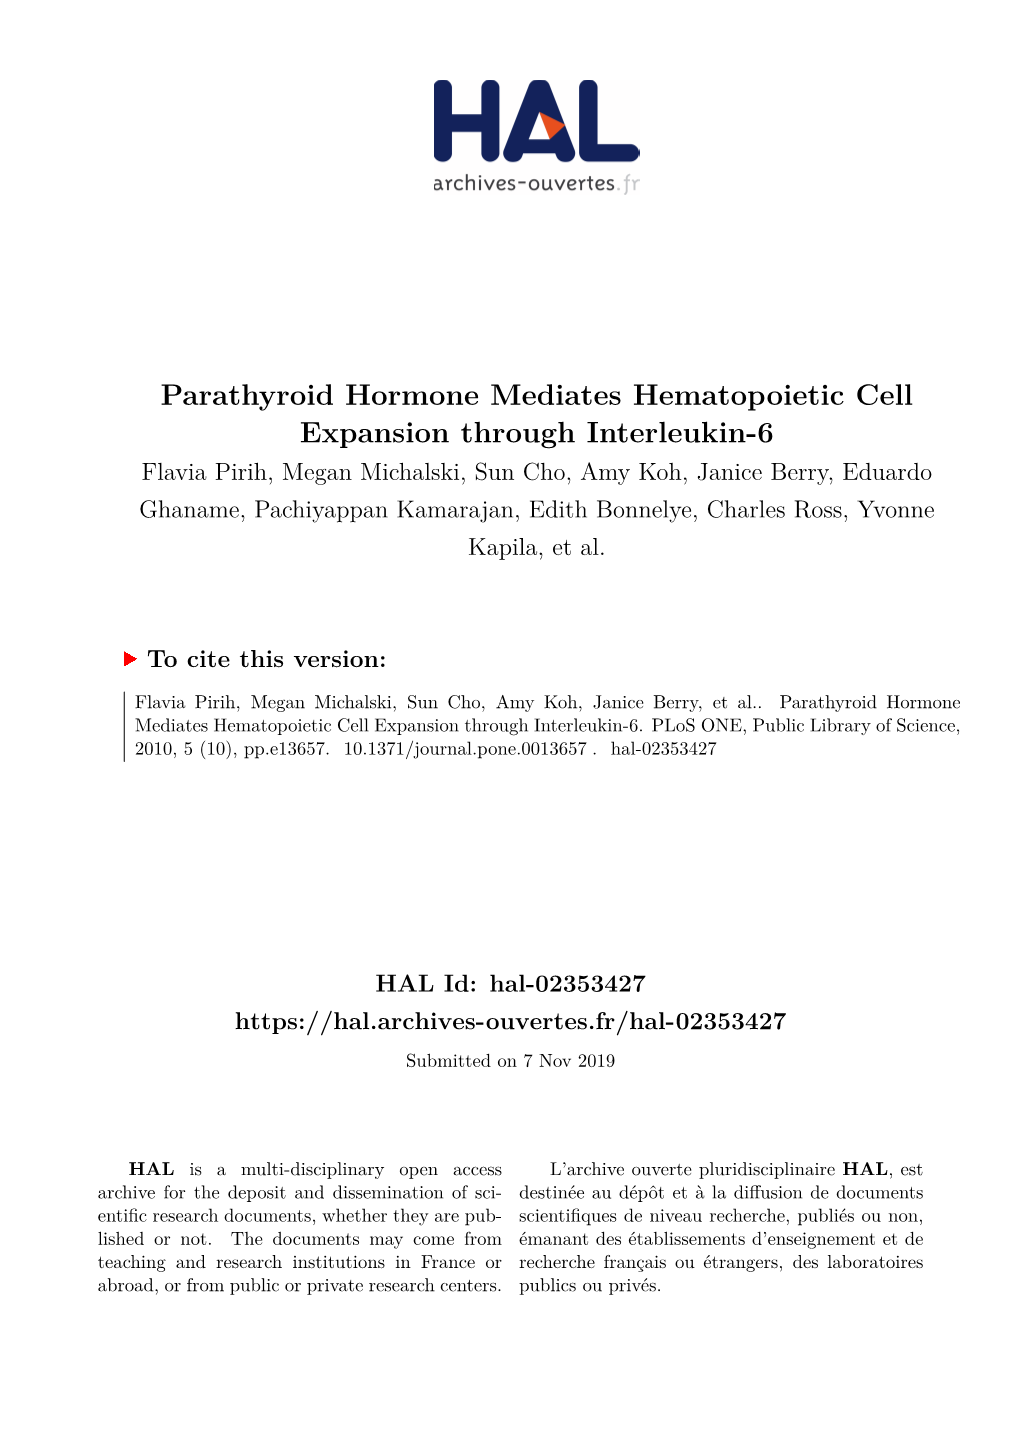 Parathyroid Hormone Mediates Hematopoietic Cell Expansion